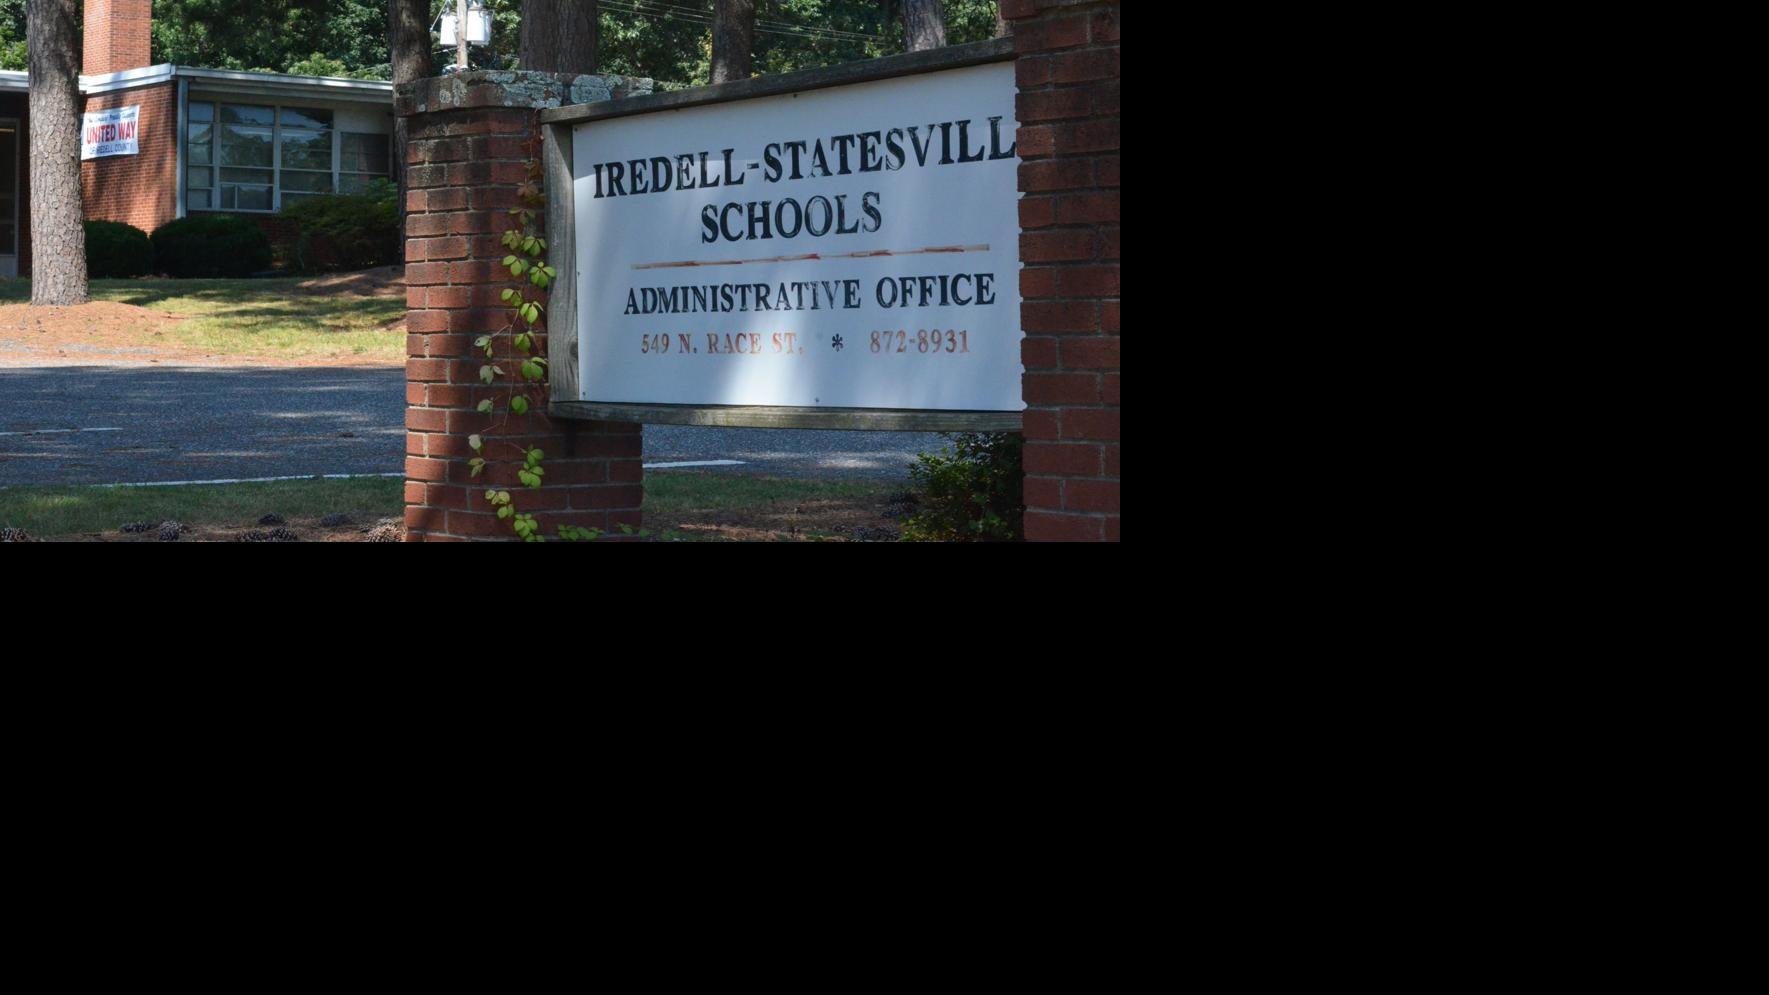 IredellStatesville Schools prepare to make Plan B work for students